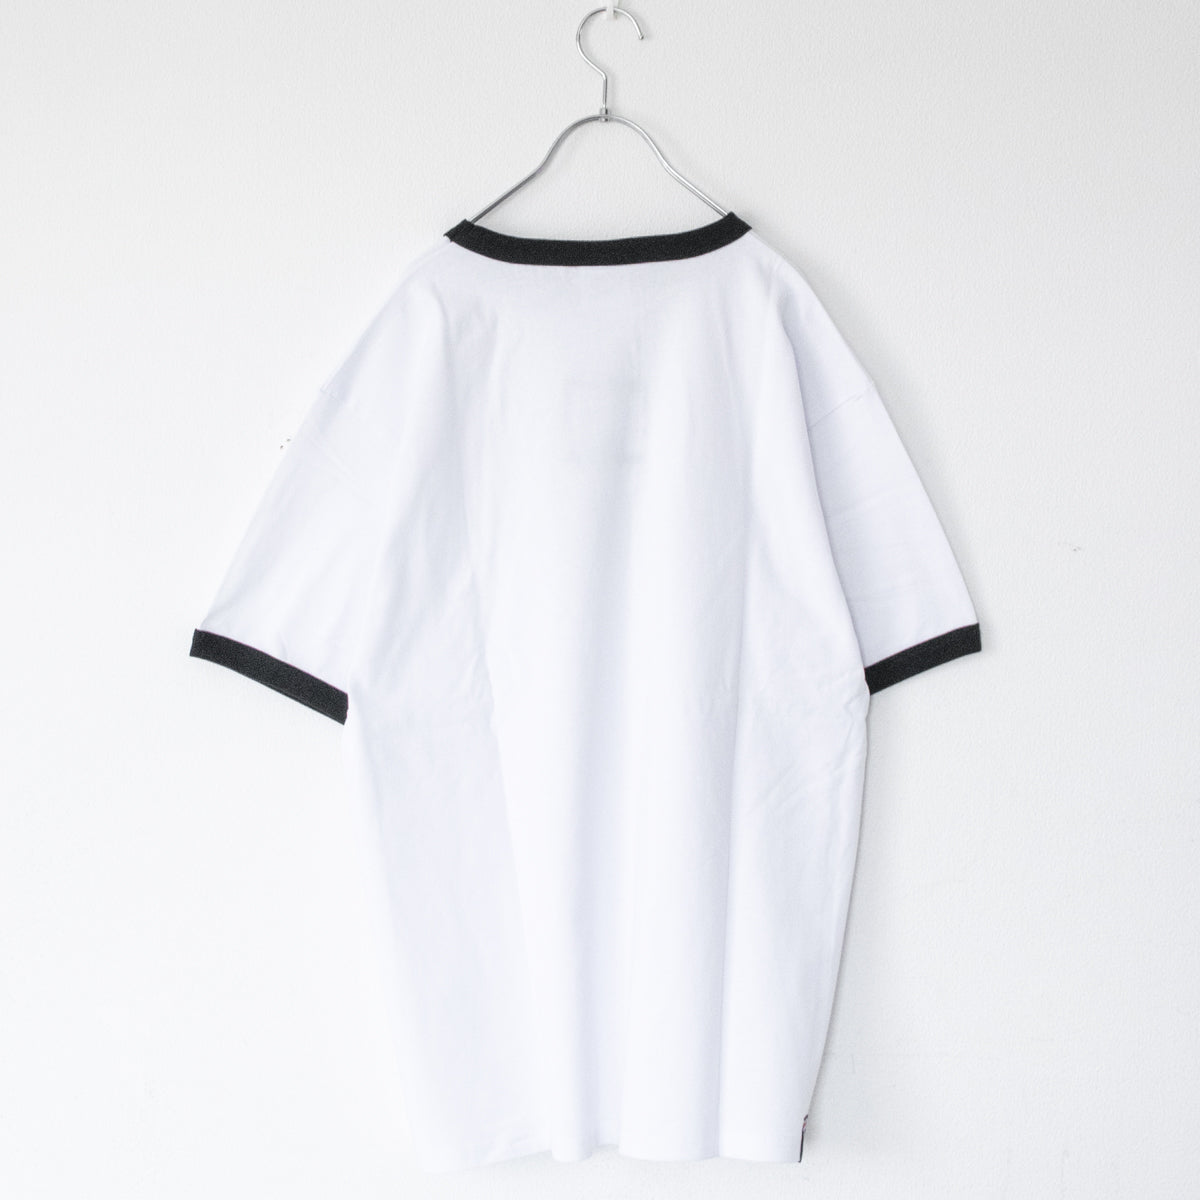 VISION STREET WEAR x HELLO KITTY リンガー スケボーロゴ Tシャツ WHITE